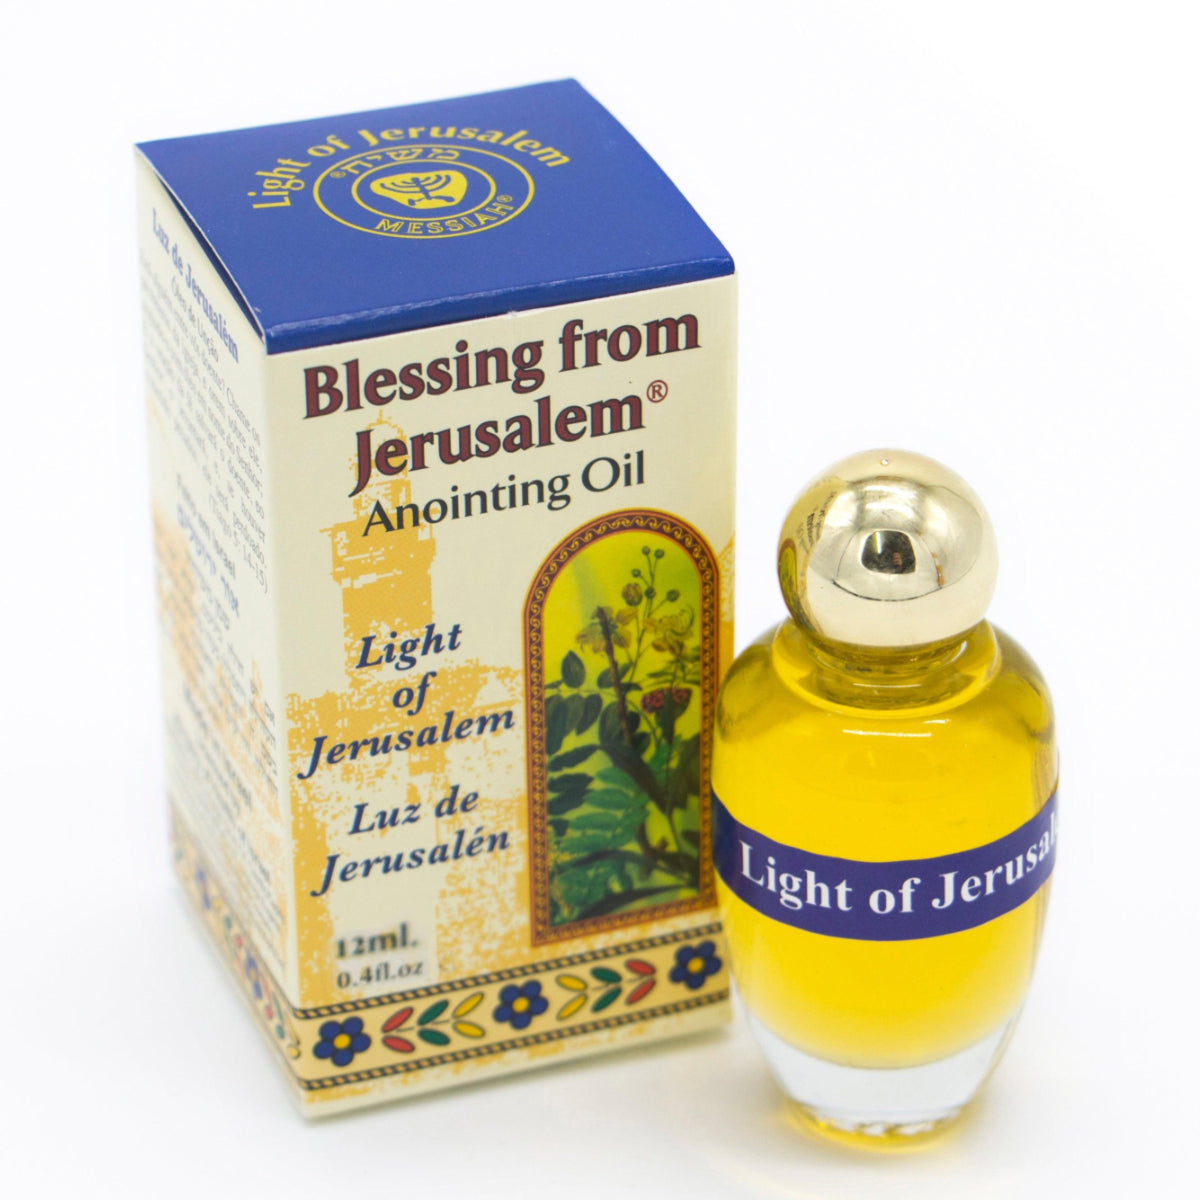 Light of Jerusalem Anointing Oil -Blessing From Jerusalem 12 ml. - 0.4 fl. oz.